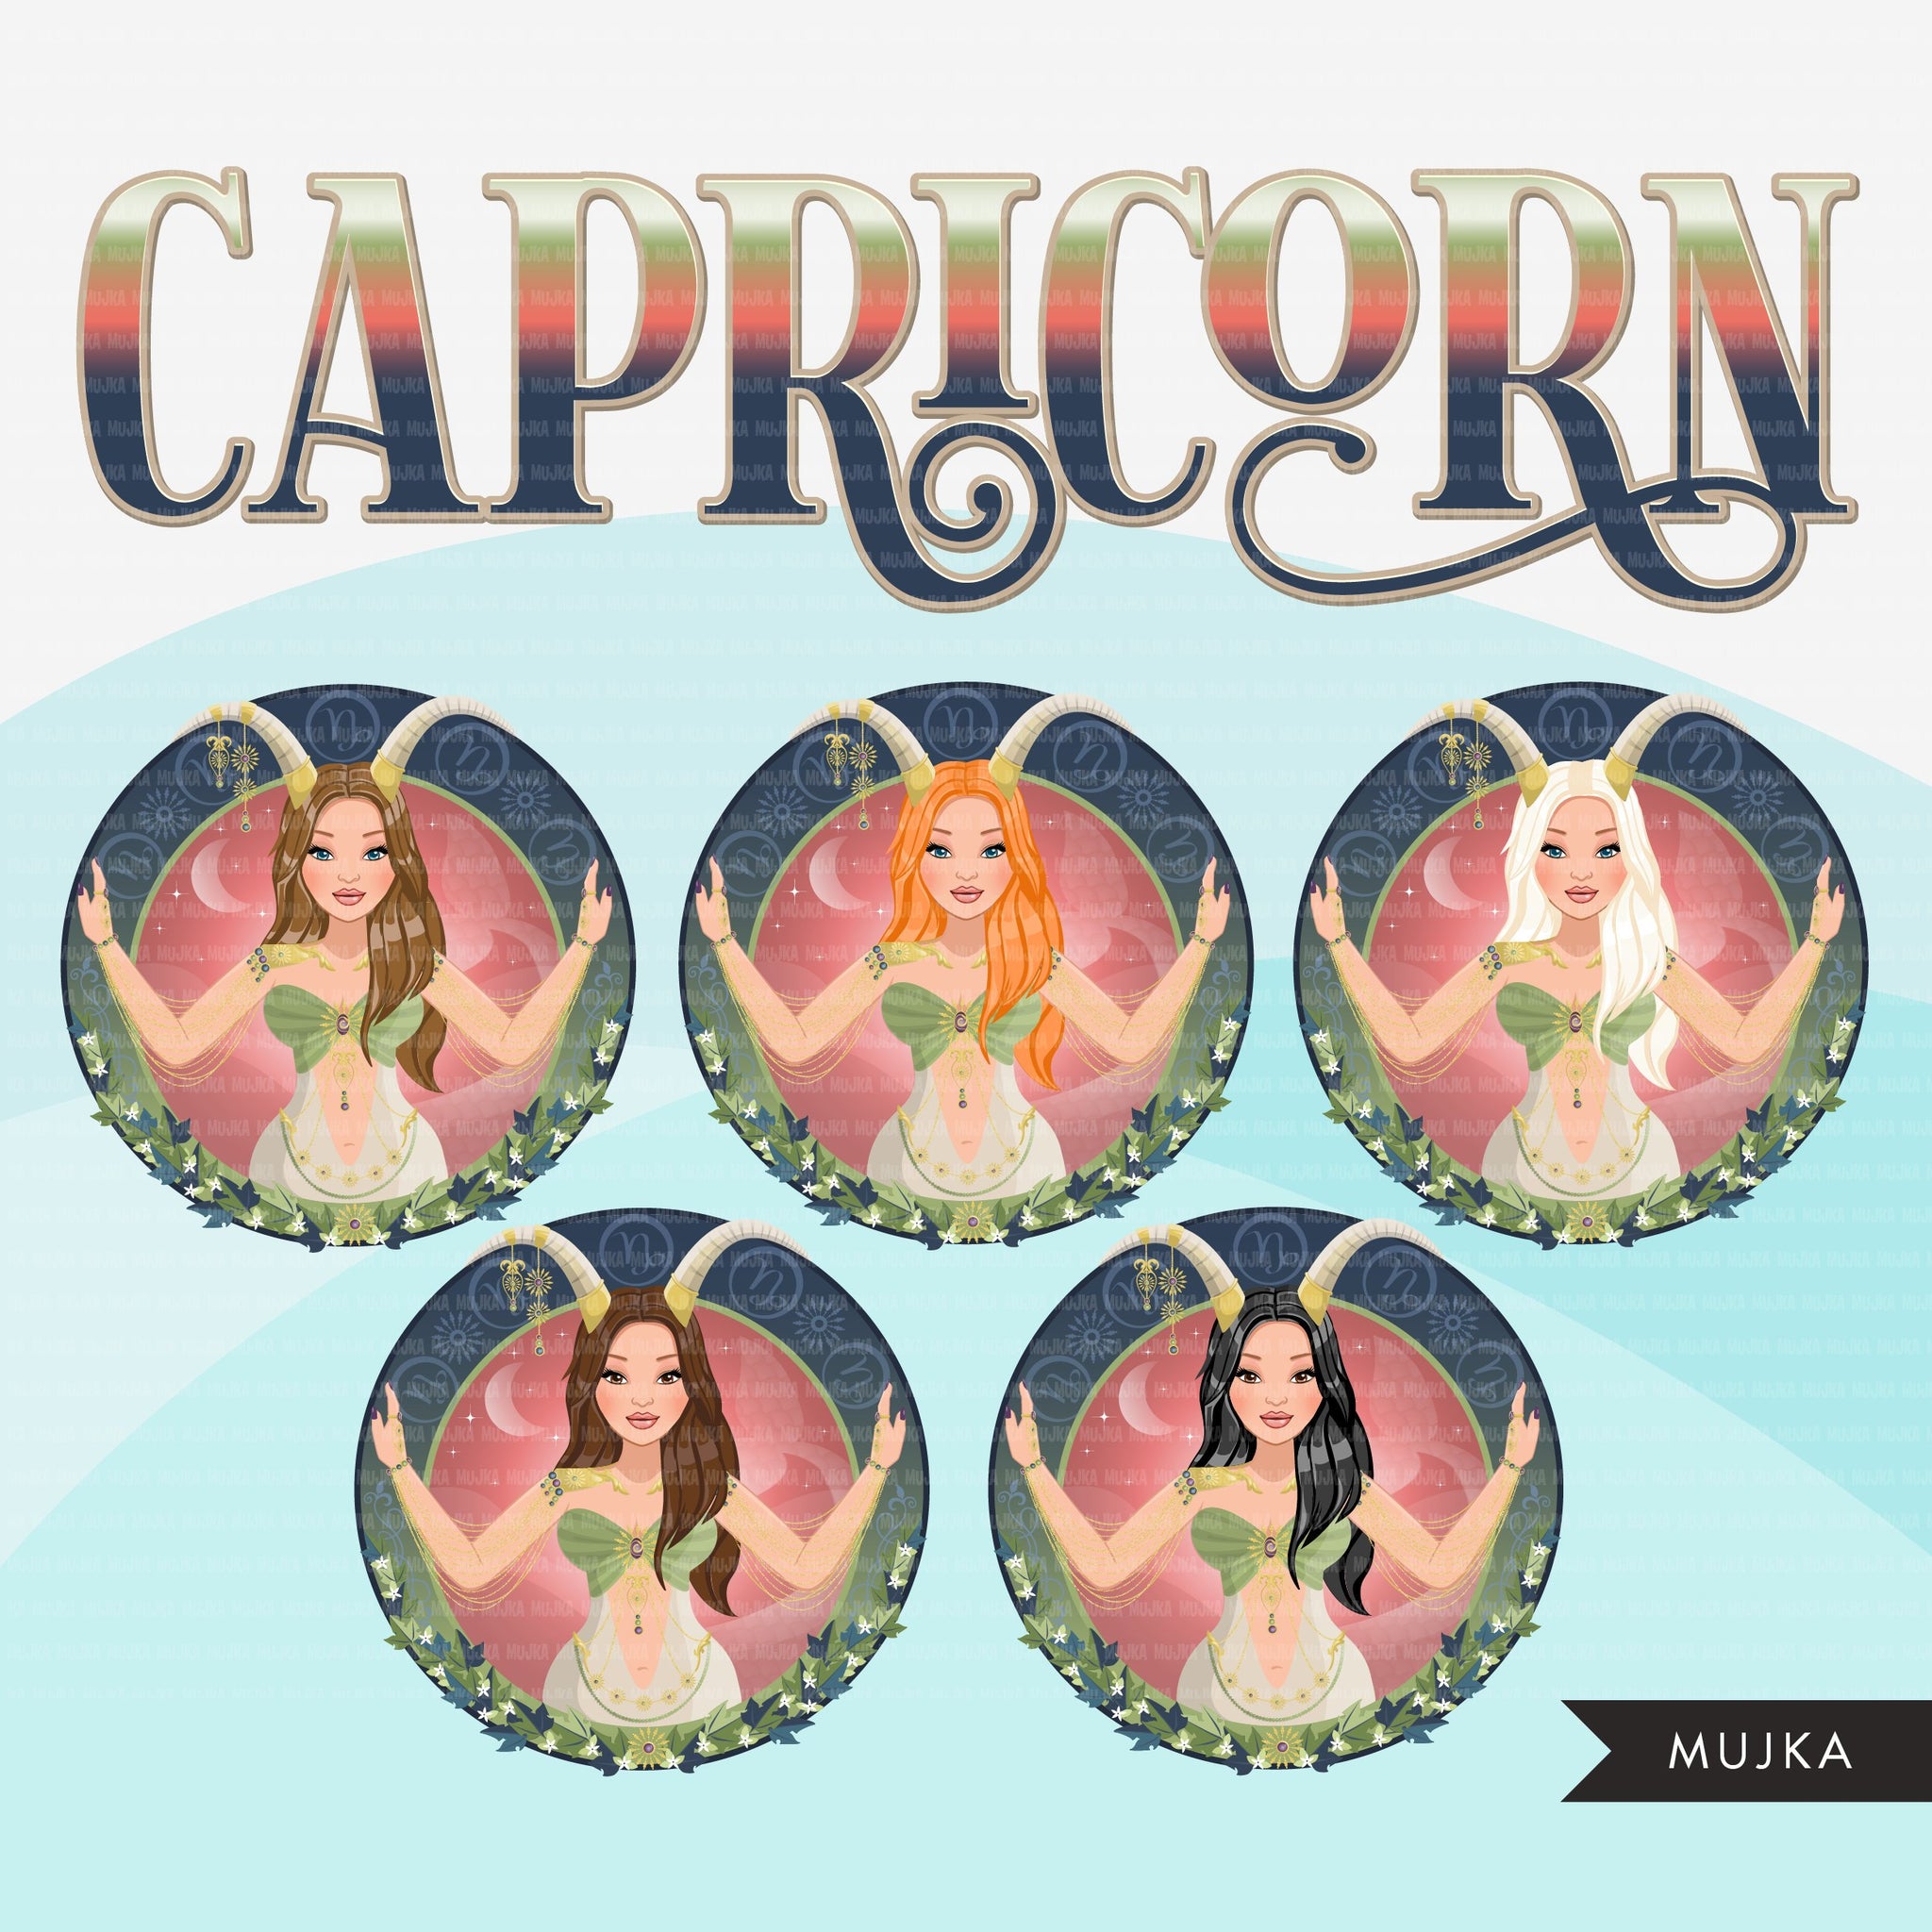 Zodiac Capricorn Clipart, Png digital download, Sublimation Graphics for Cricut & Cameo, Caucasian Woman long hair Horoscope sign designs